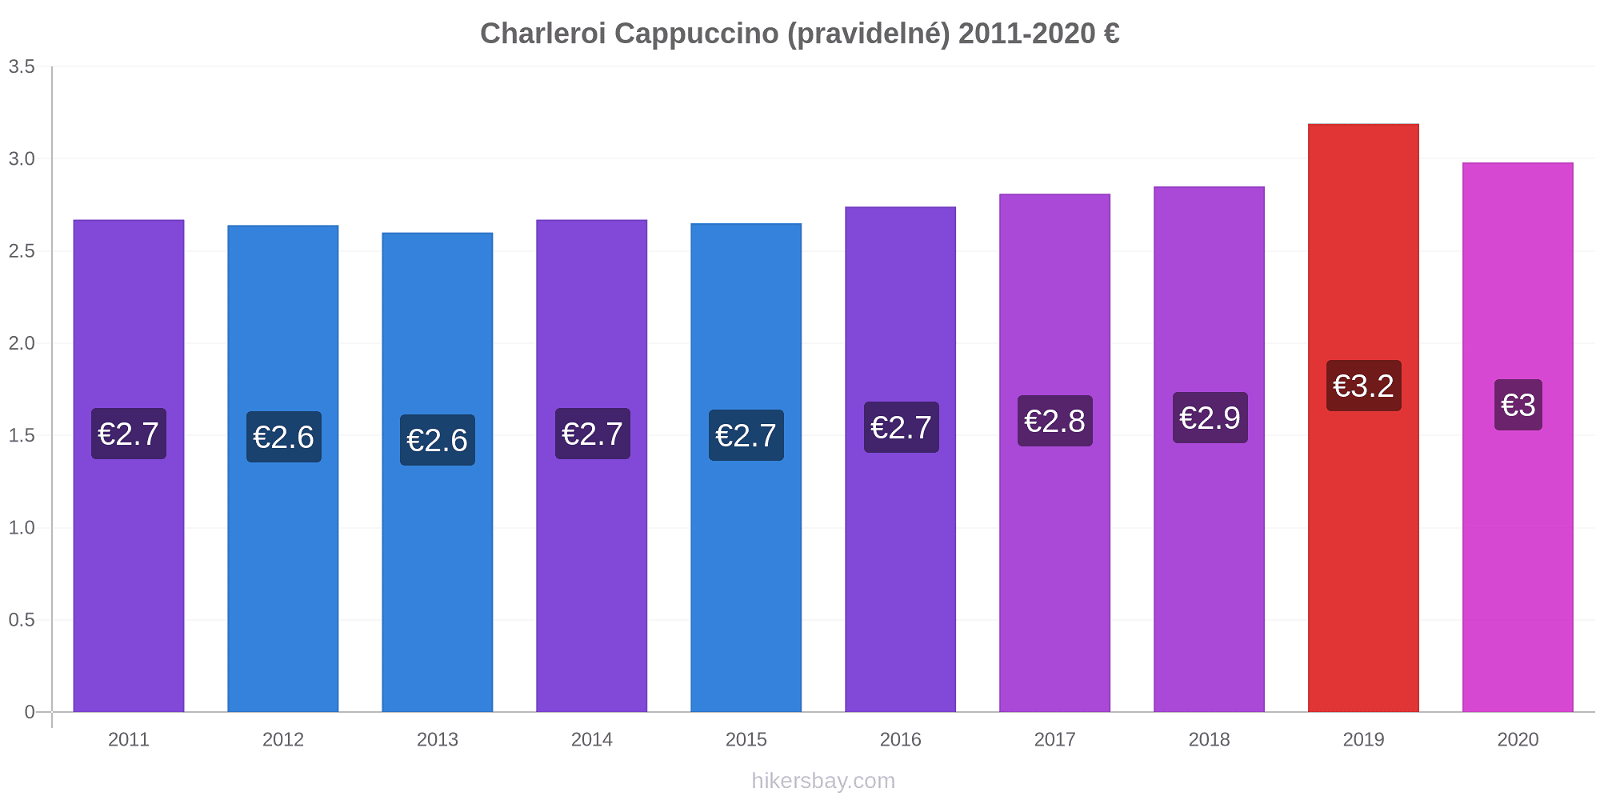 Charleroi změny cen Cappuccino (pravidelné) hikersbay.com